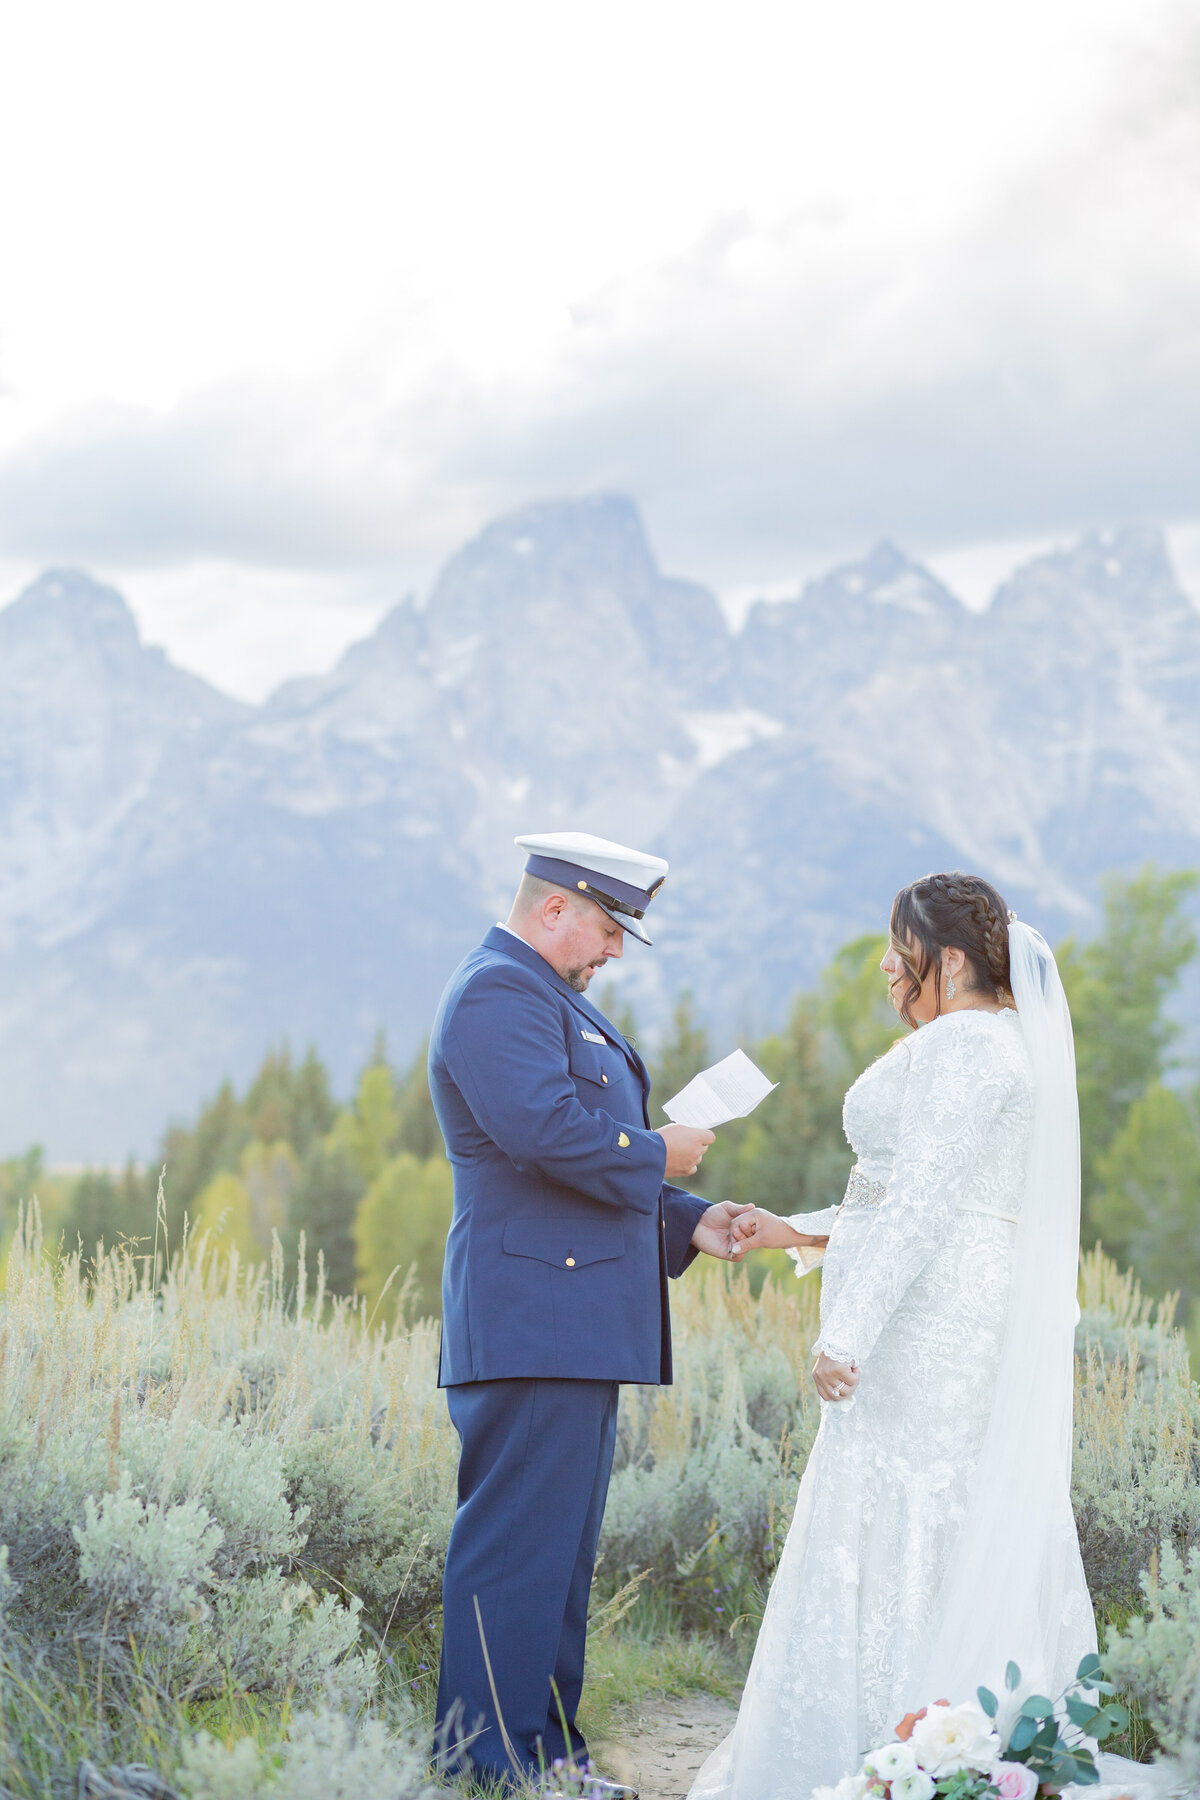 Washington Elopement photographer captures groom reading vows to bride during mountain elopement